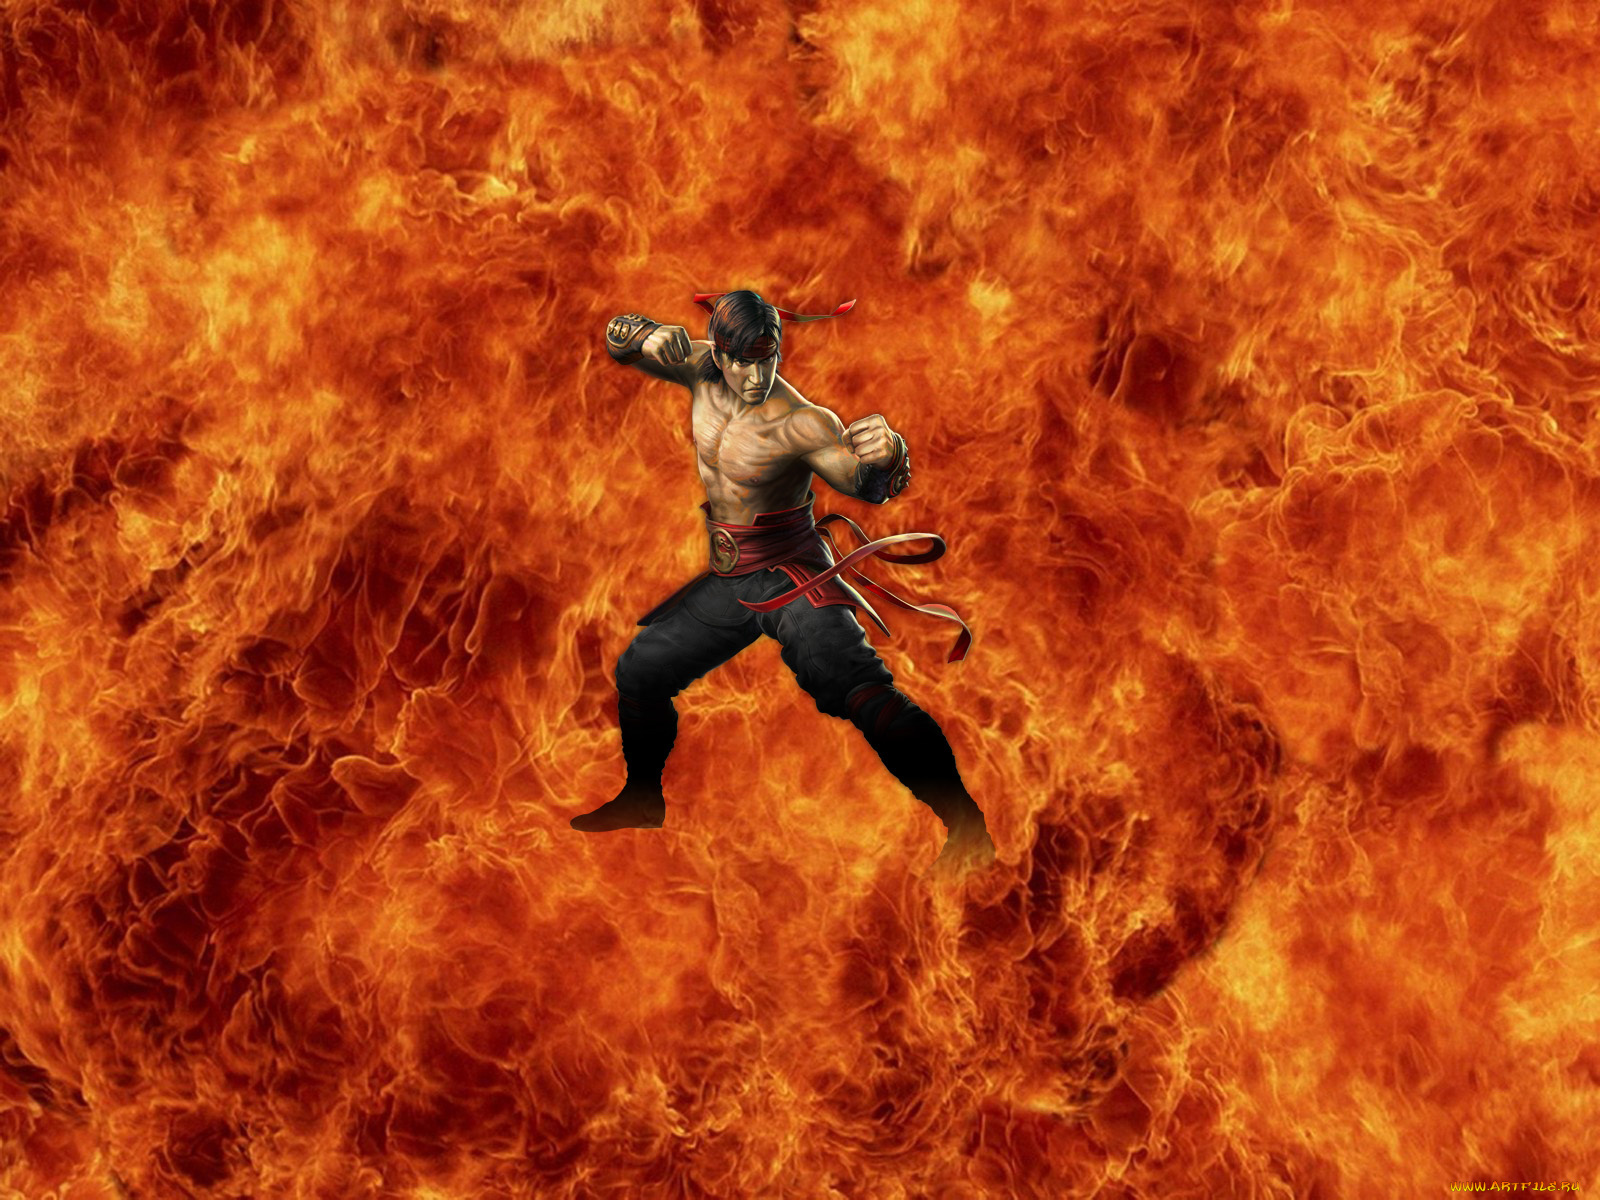 Combat видео. Огненный боец Mortal Kombat. Мортал комбат пламя. MK Armageddon. Картинки мортал комбат.